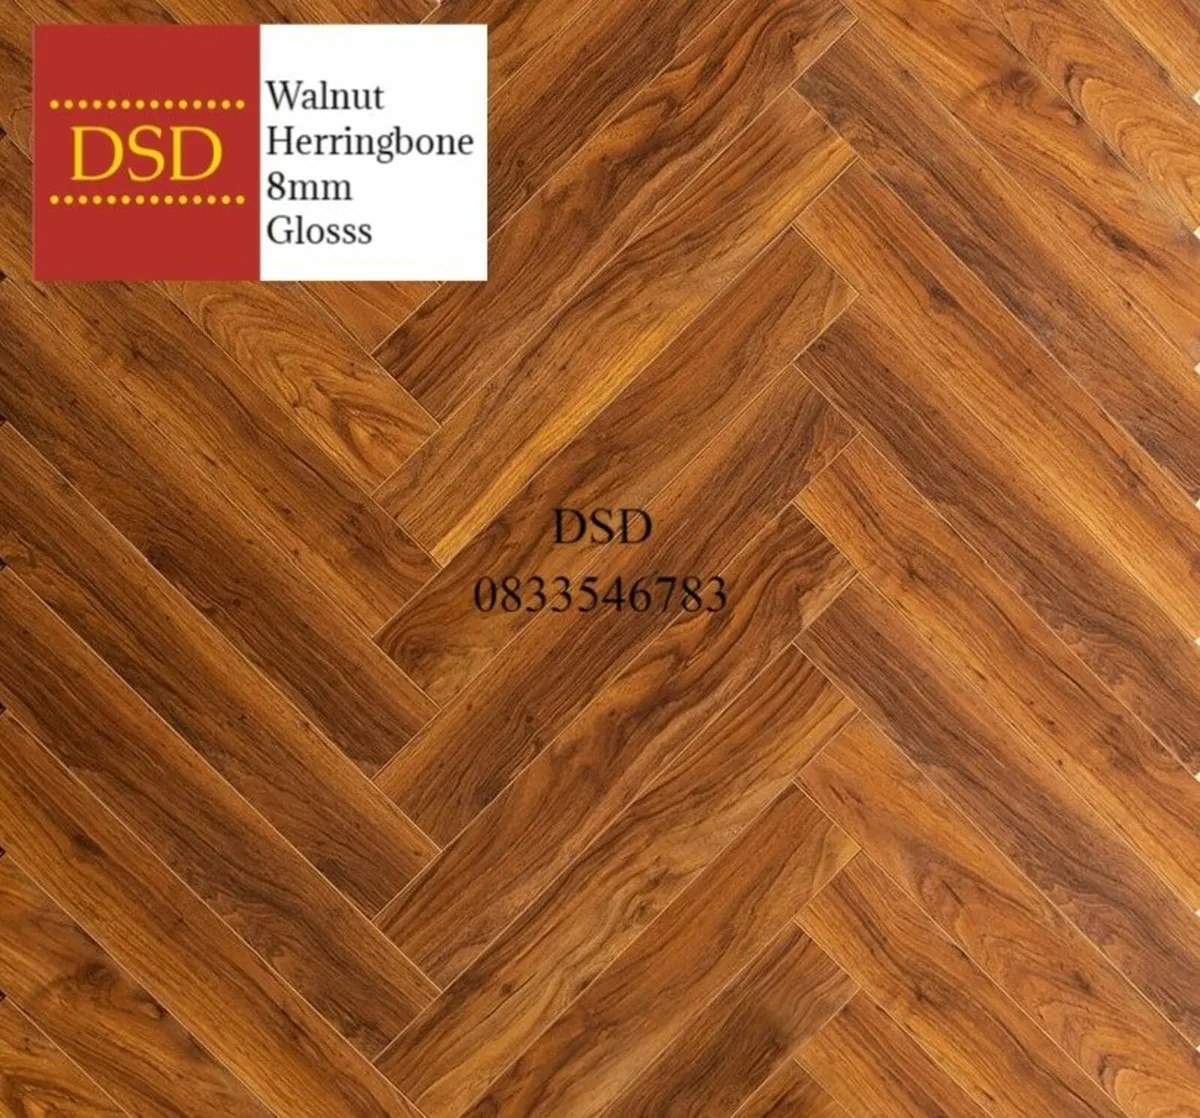 Walnut Herringbone 8mm Gloss Flooring